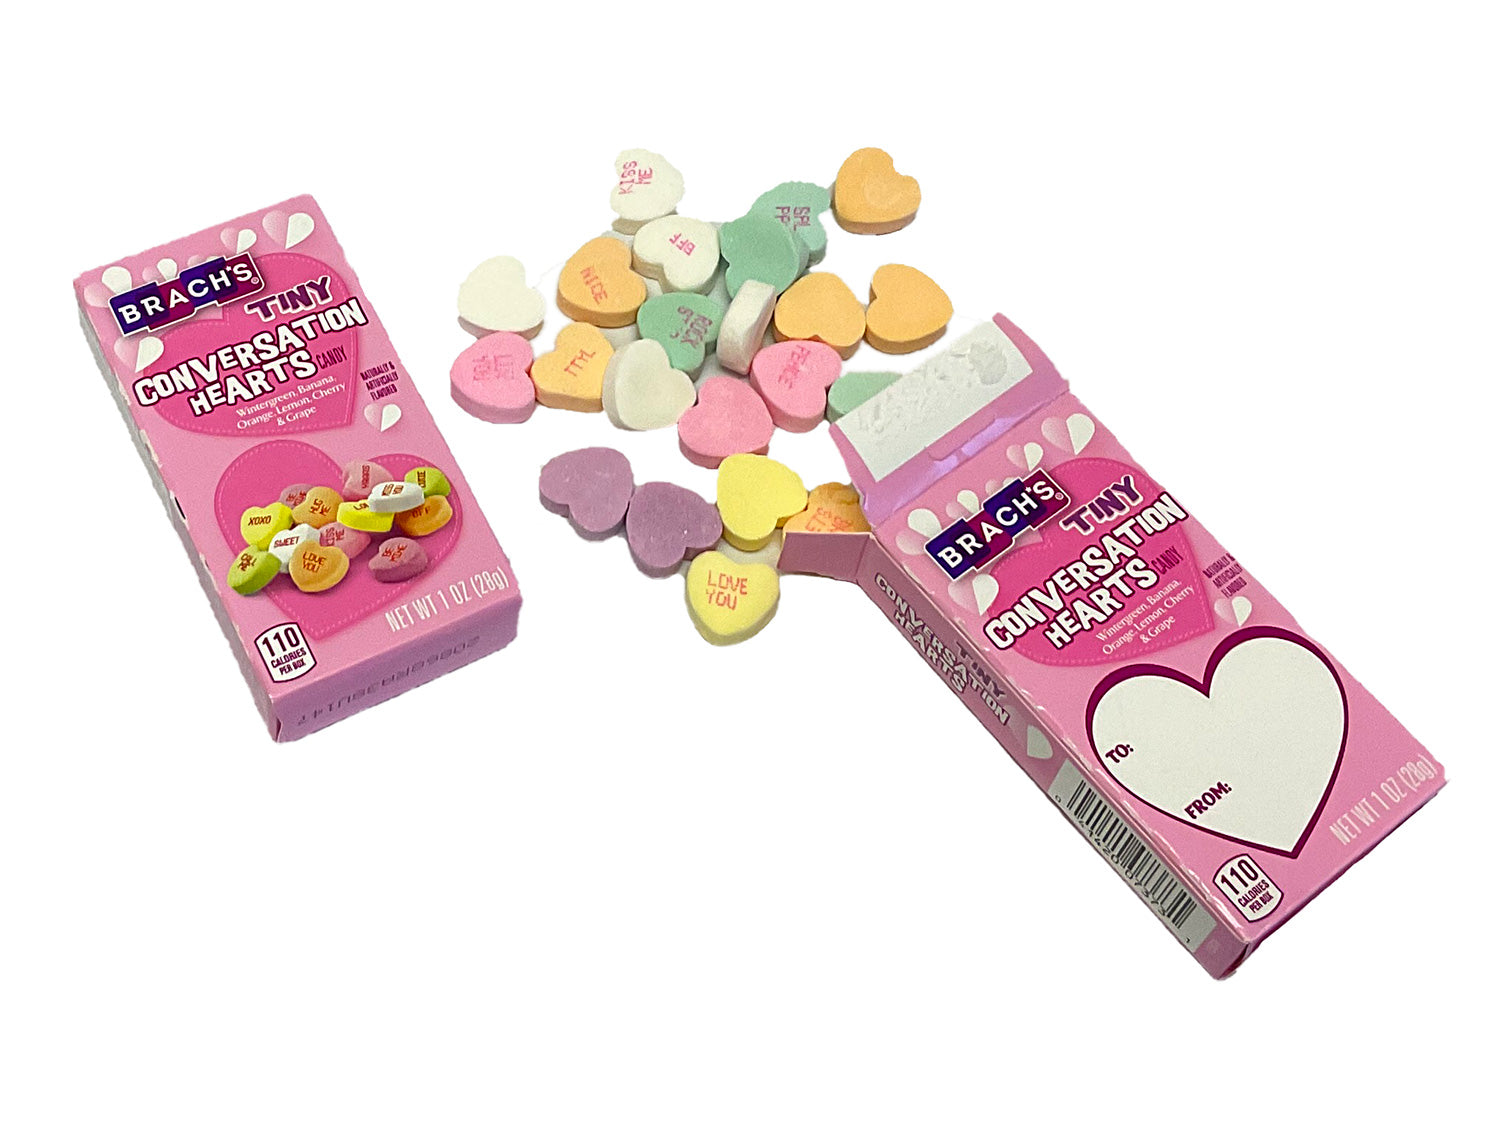 Brach's Tiny Conversation Hearts Candy Valentine's Day Box, 0.75oz